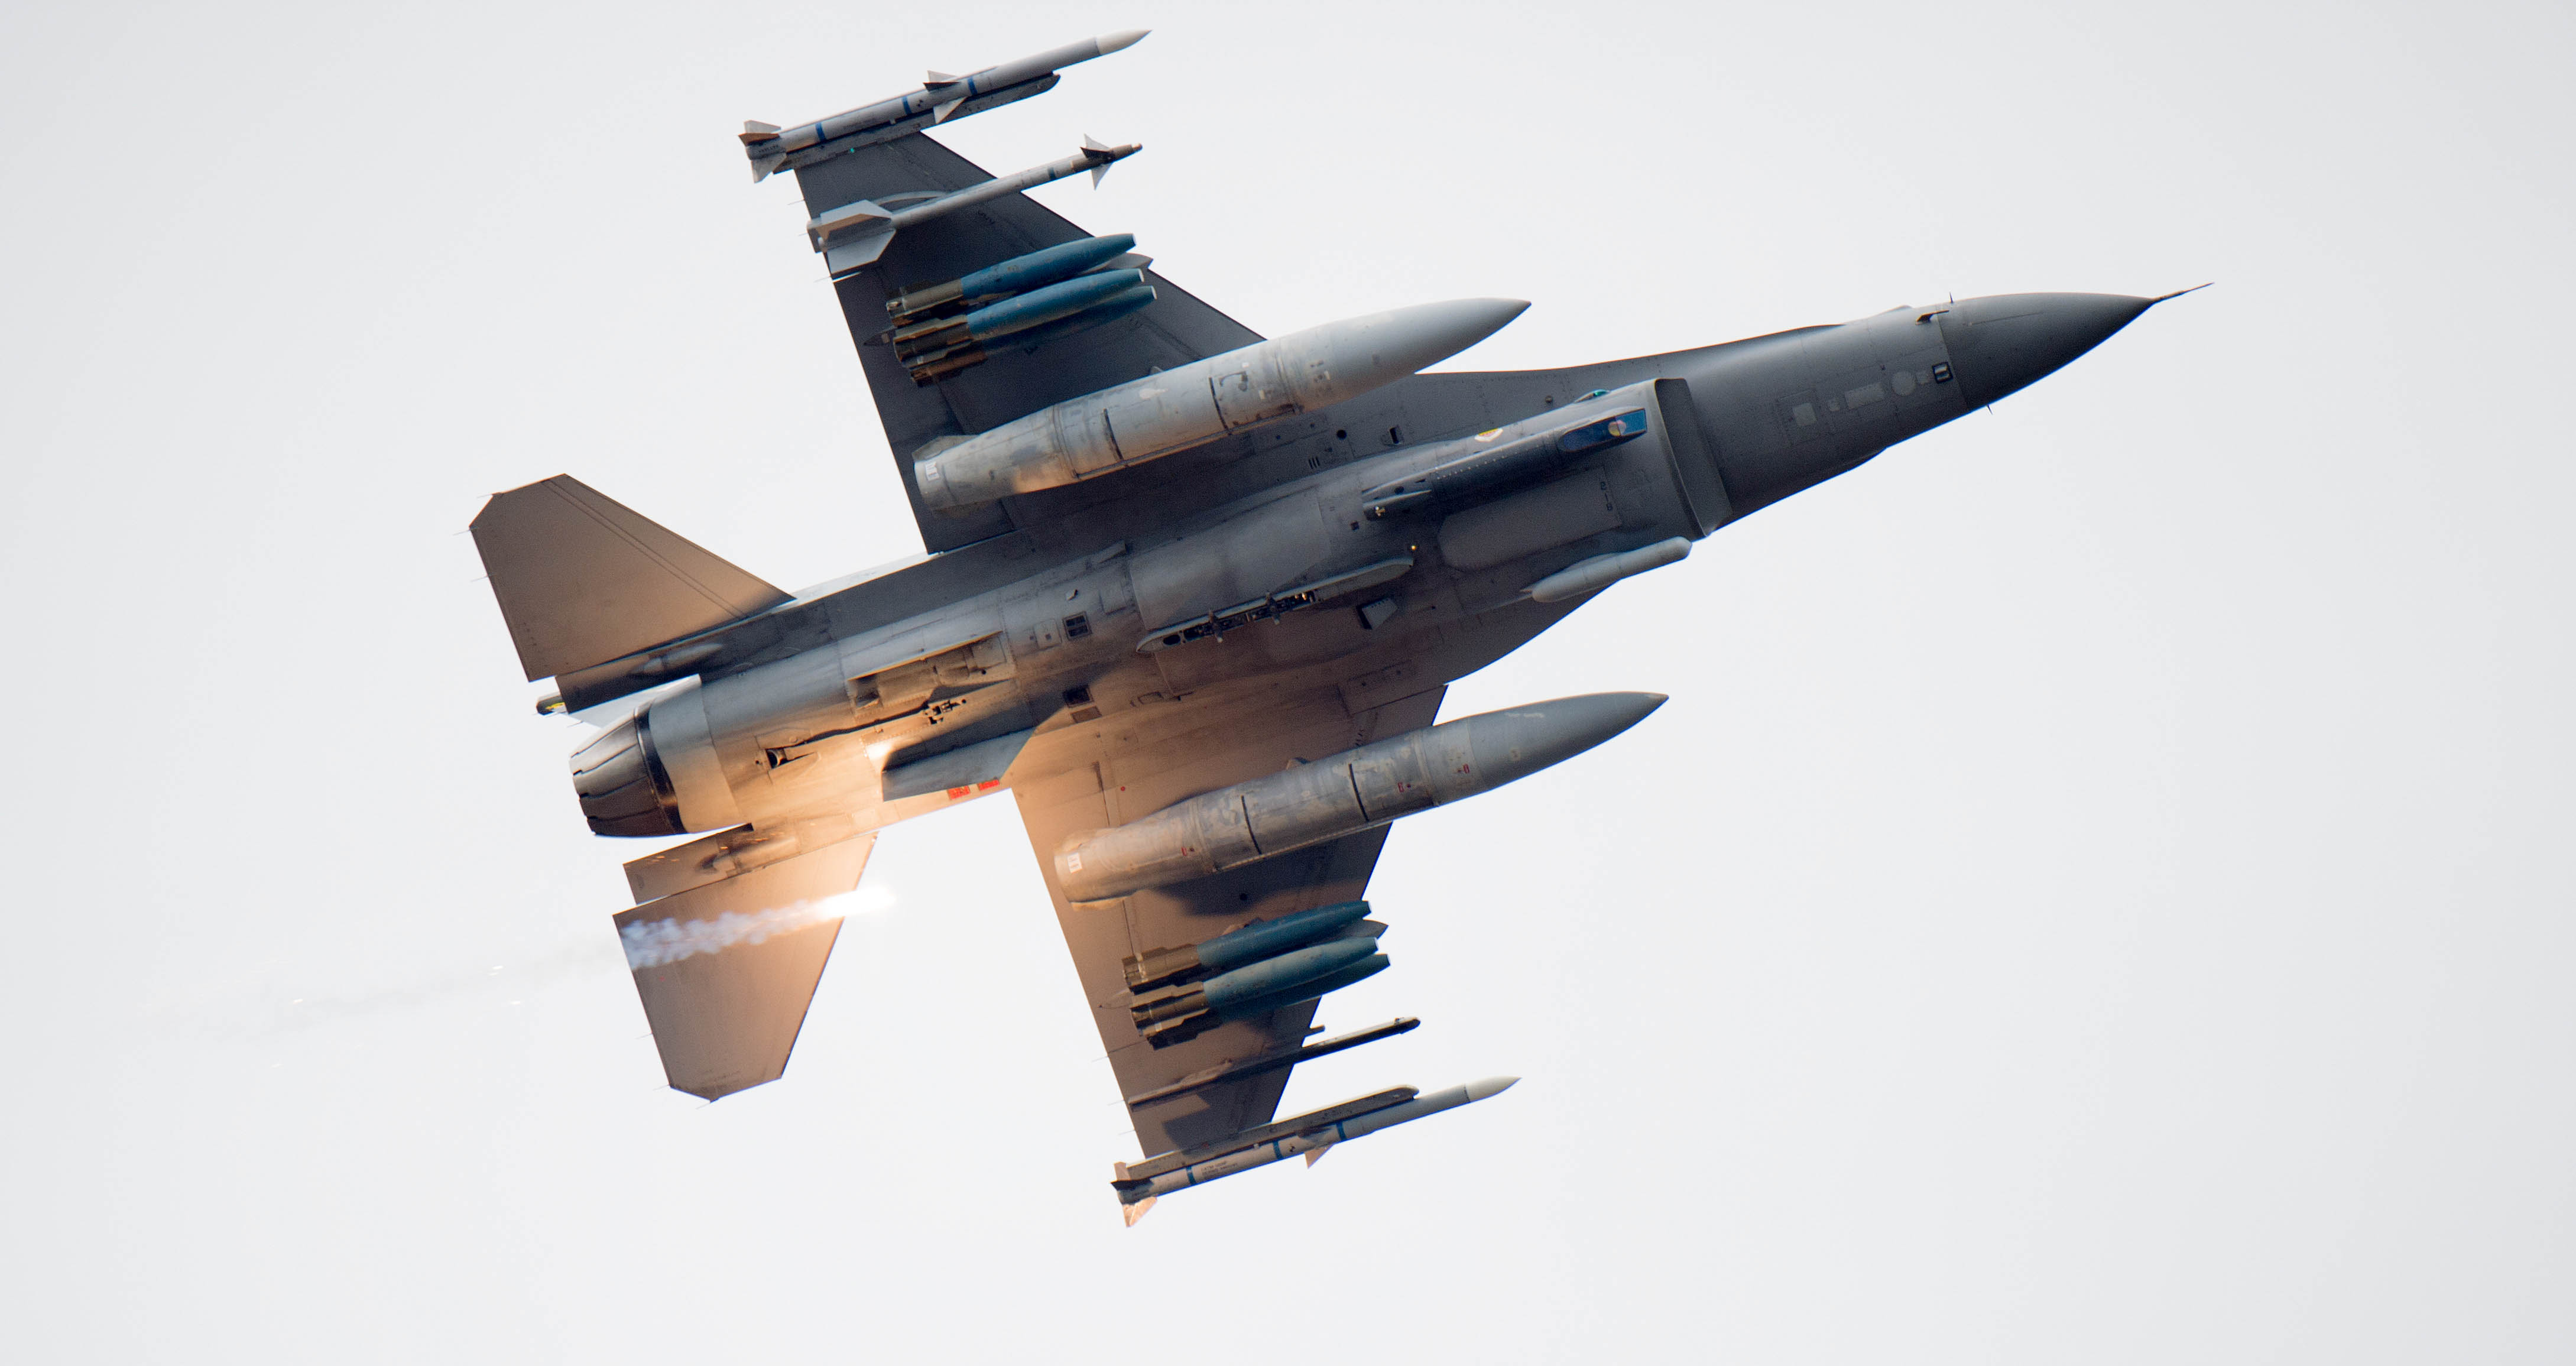 F-16 dispensing flares